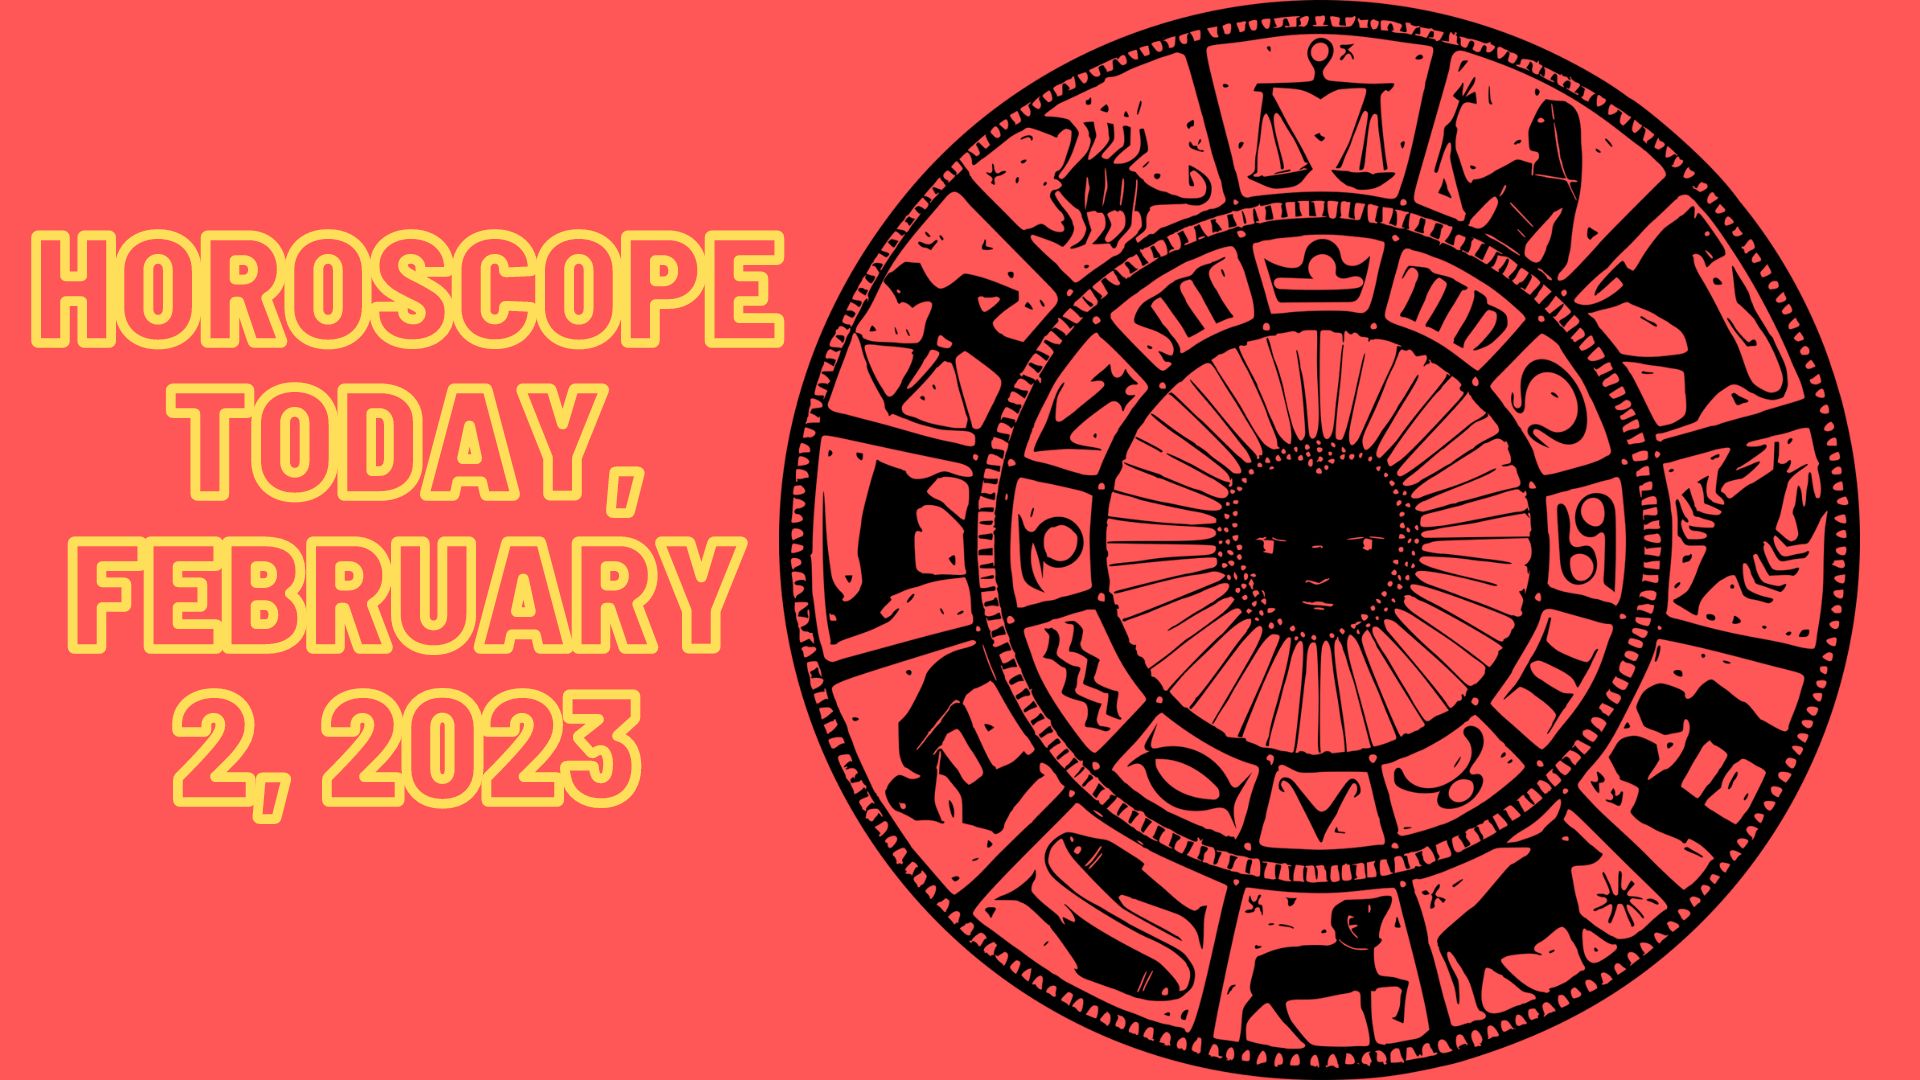 Horoscope Today, February 2, 2023 - Read Your Daily Horoscope Predictions Here